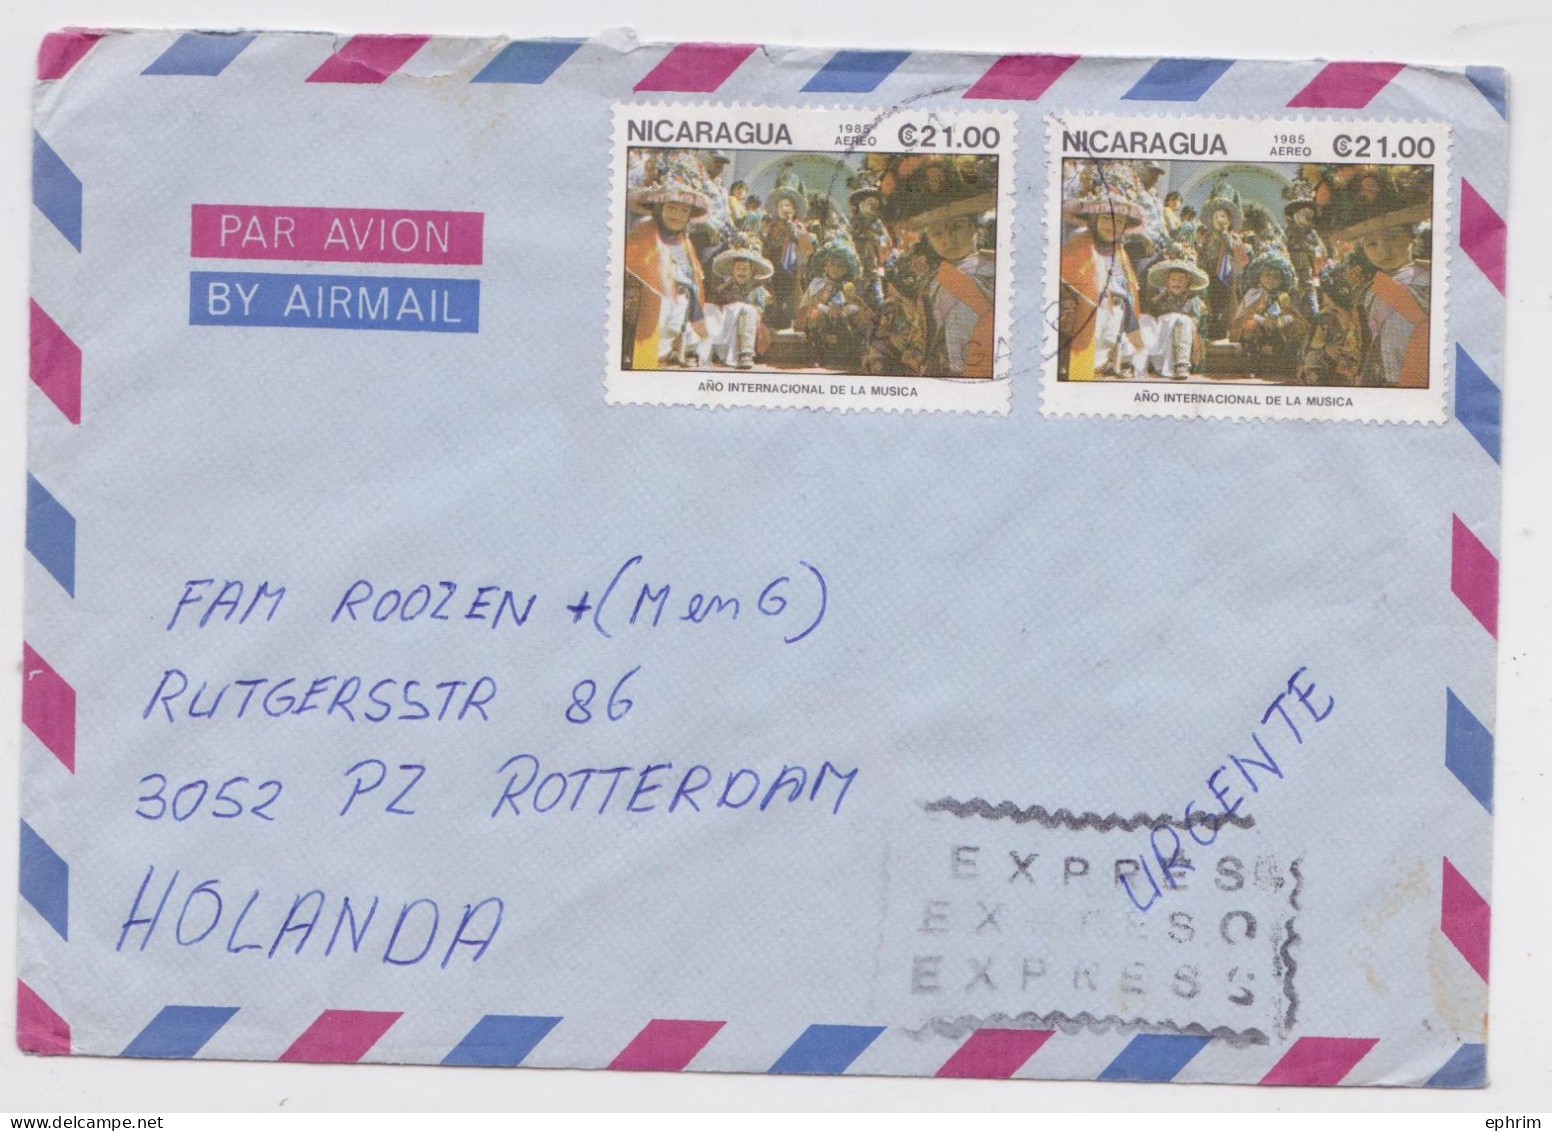 Nicaragua Matagalpa Lettre Timbre Stamp Express Air Mail Cover Sello Ano Internacional De La Musica Correo Aereo Expreso - Nicaragua